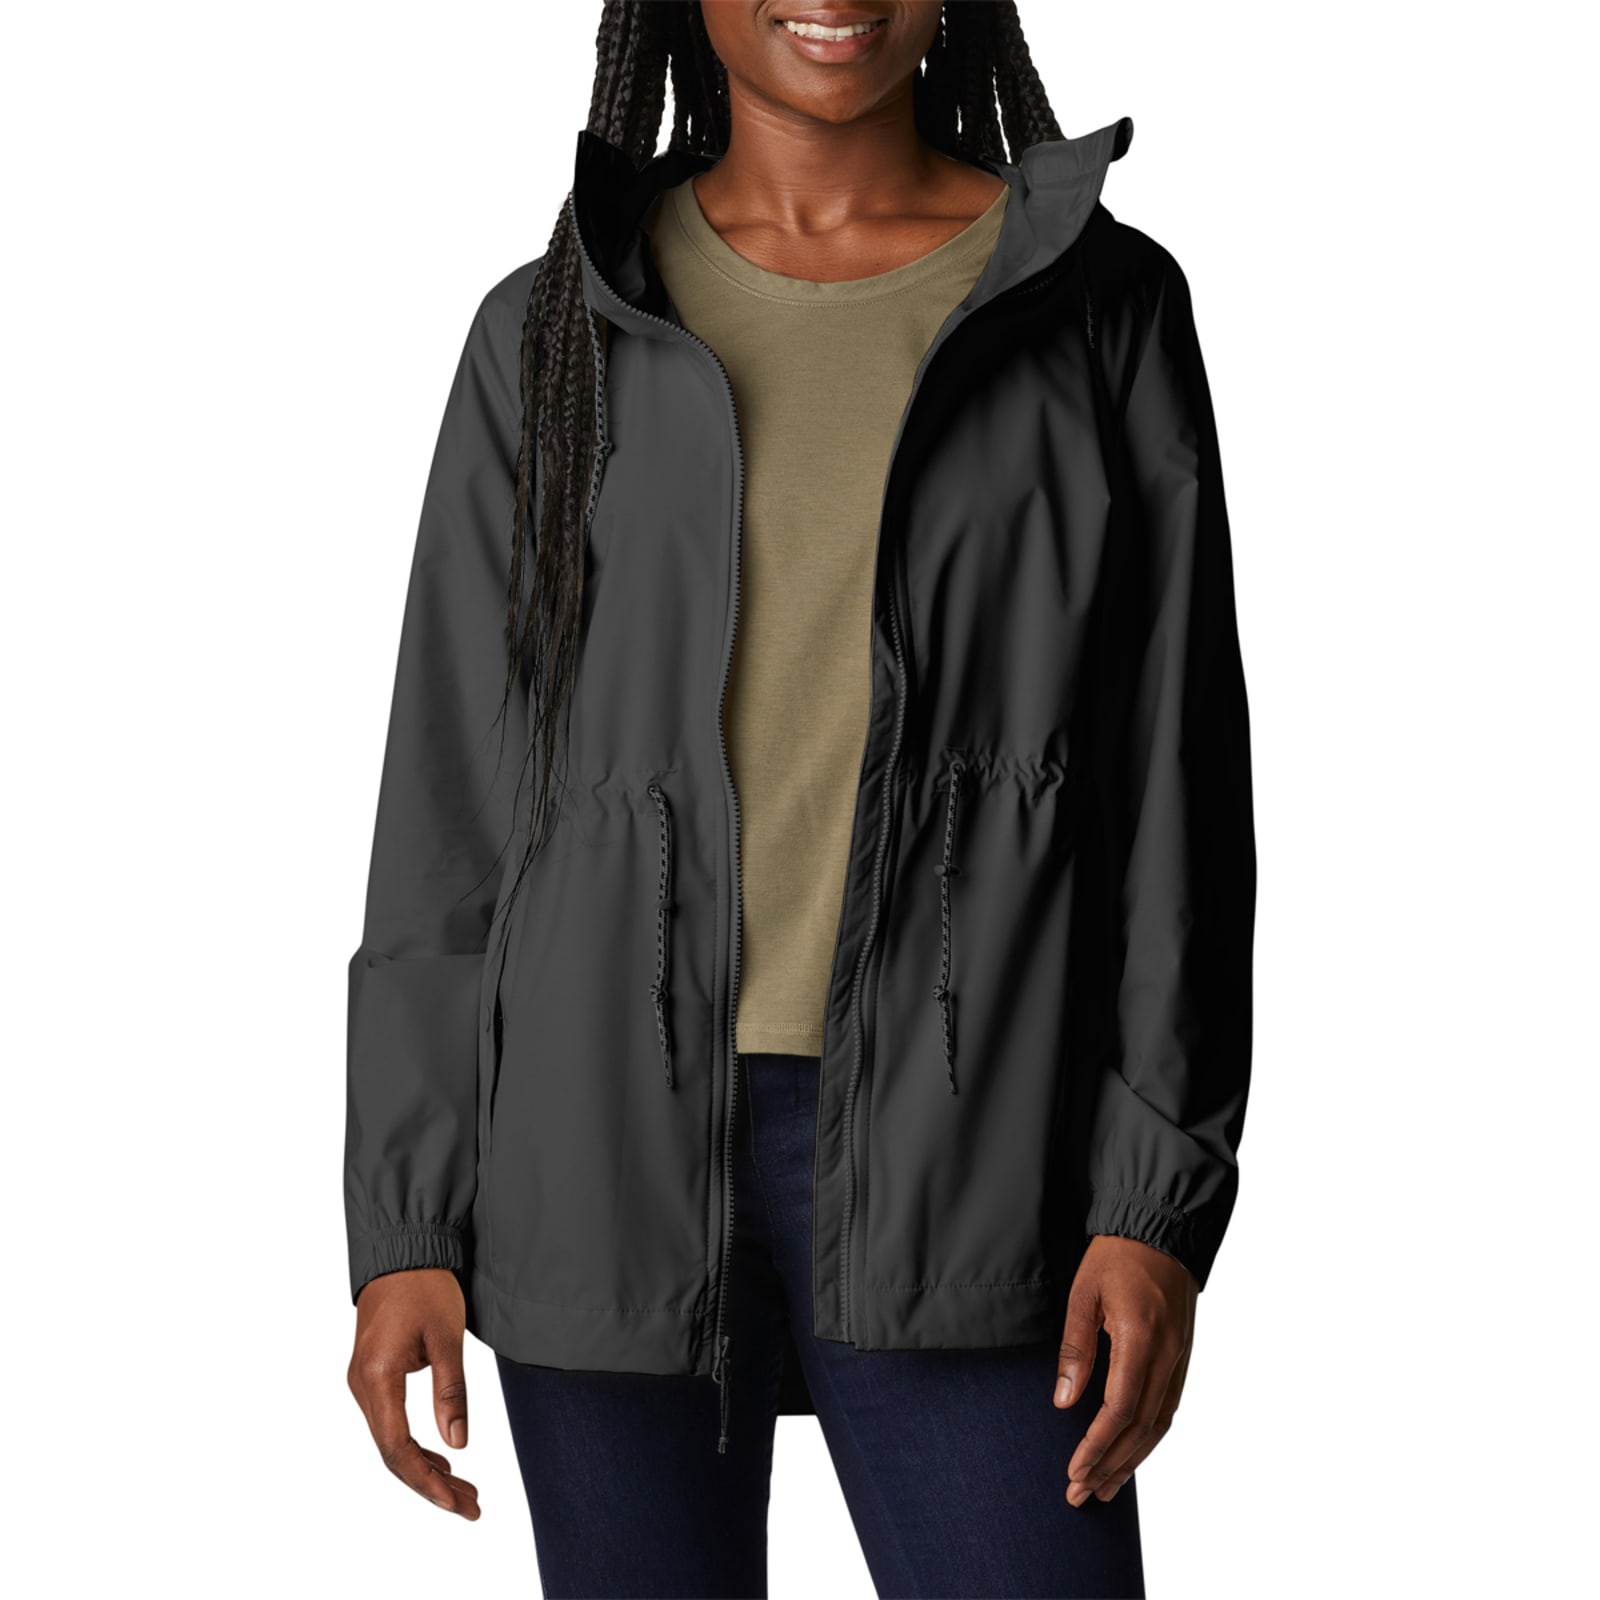 Women's Lilian Ridge Black Full Zip Rain Jacket by Columbia at Fleet Farm